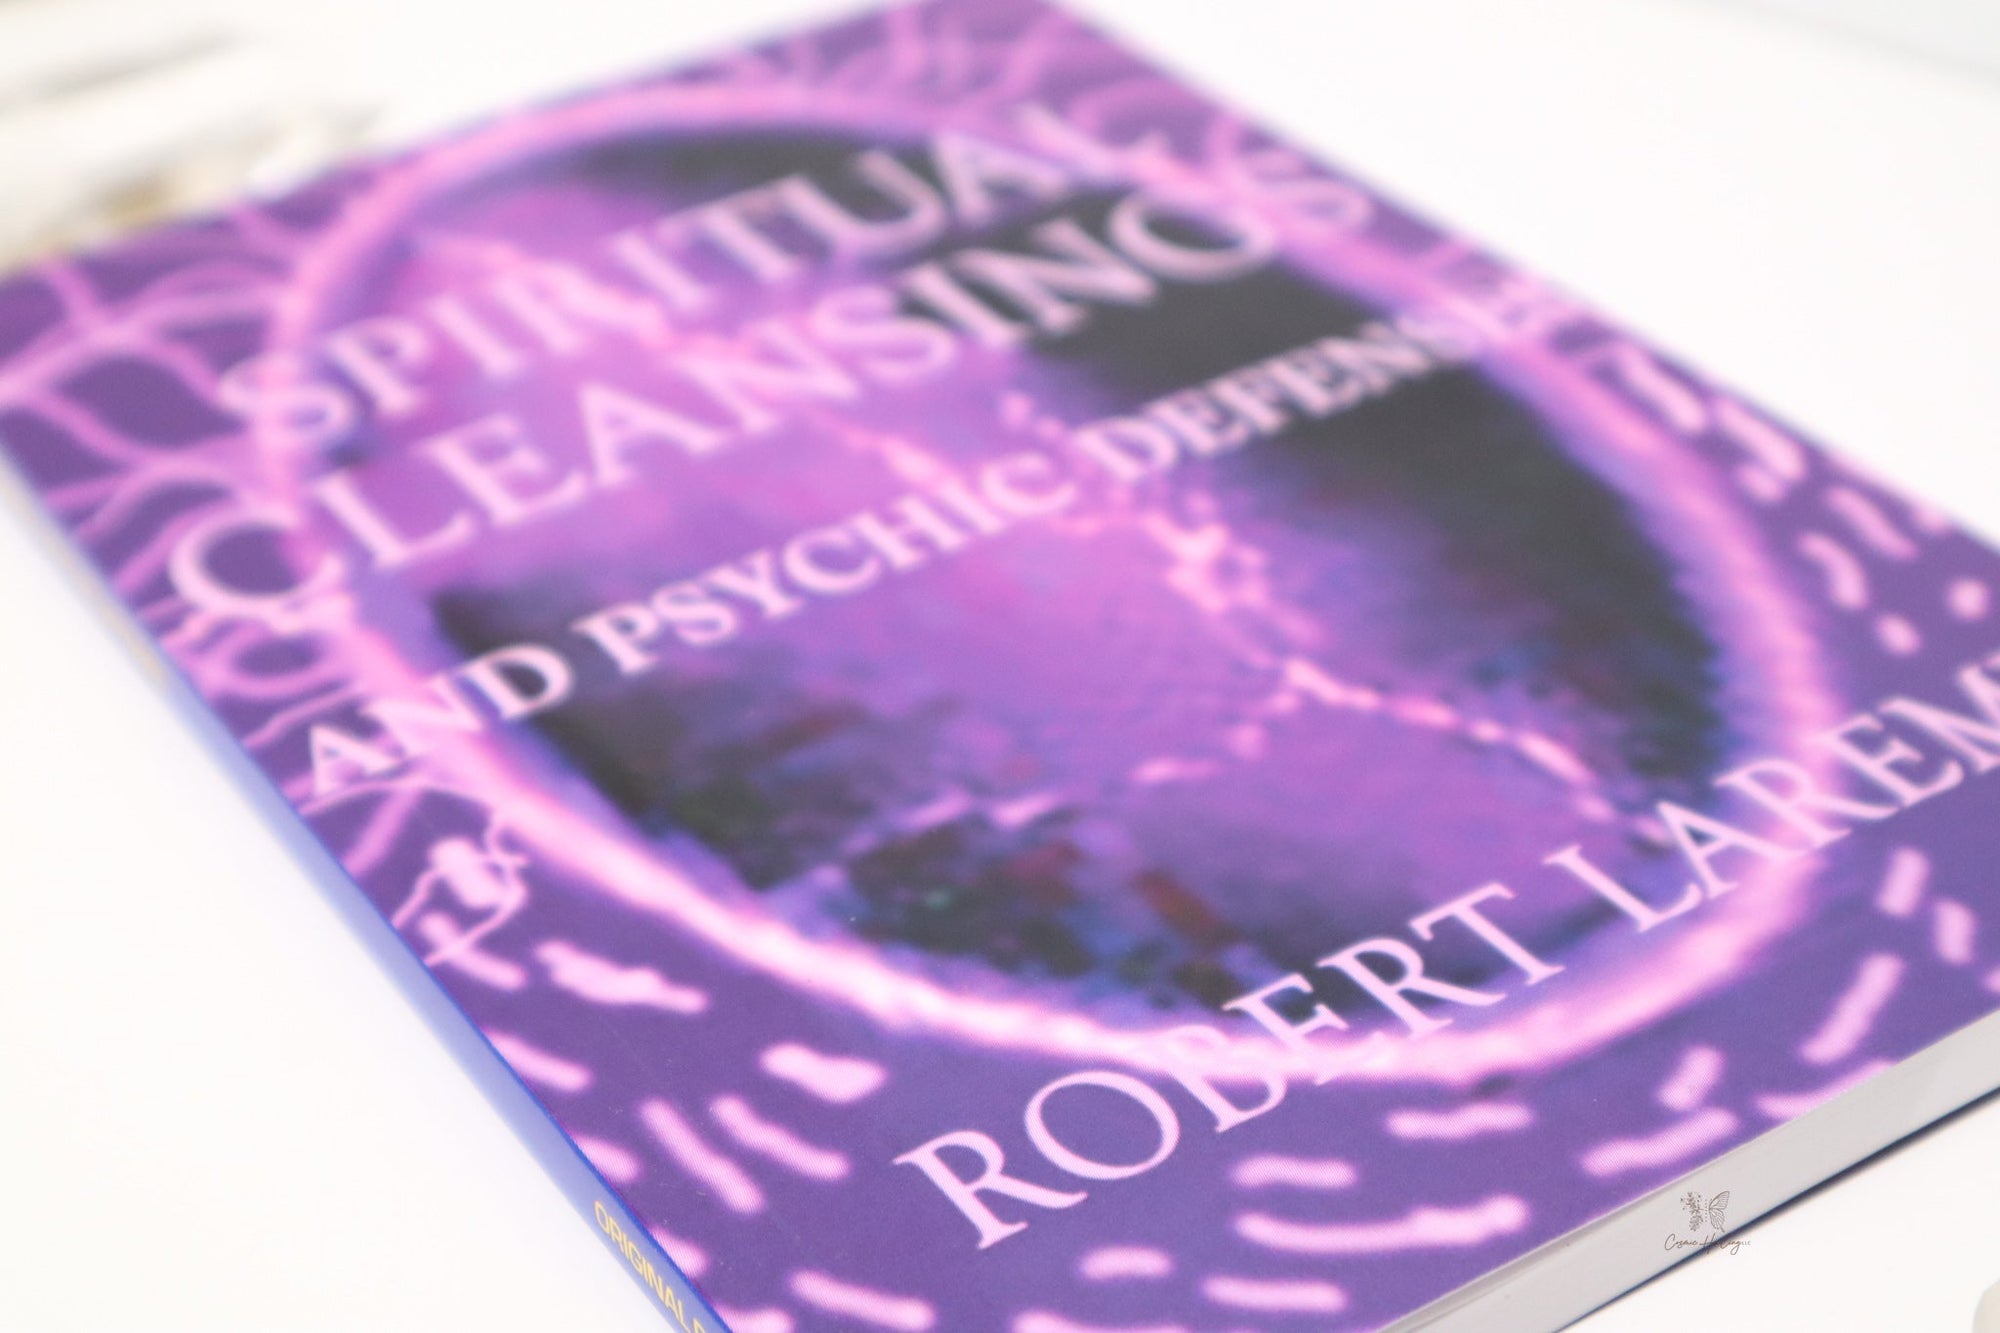 Spiritual Cleansing & Psychic Defense By Robert Laremy - Shop Cosmic Healing